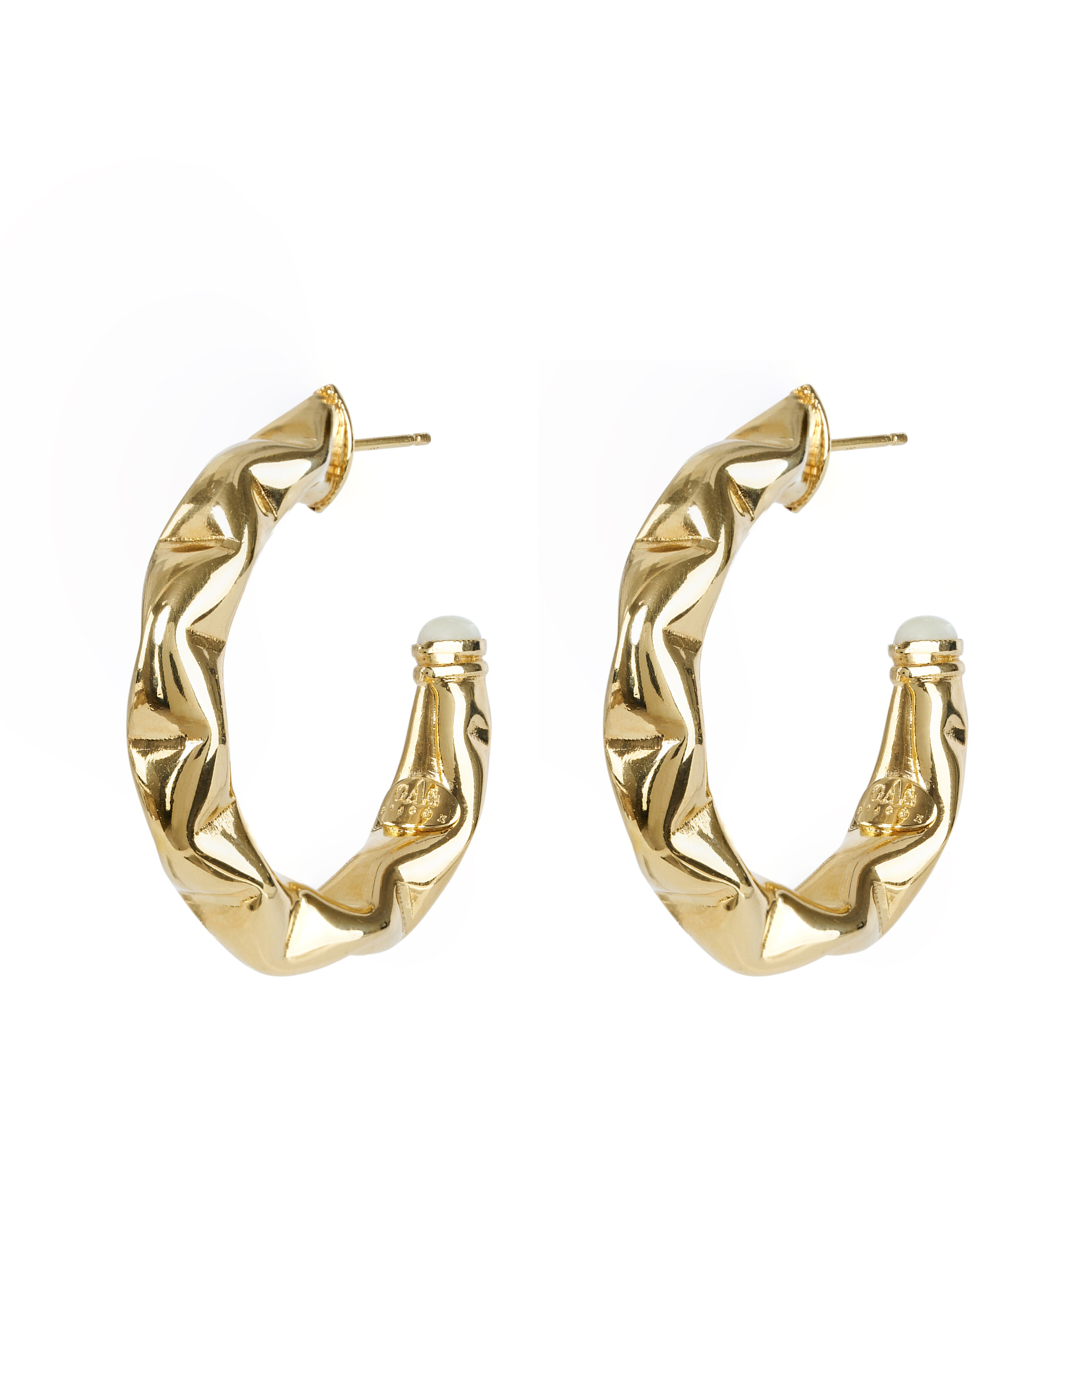 Hammered Gold Hoop Earrings 14K Gold Filled Hoops Gold 